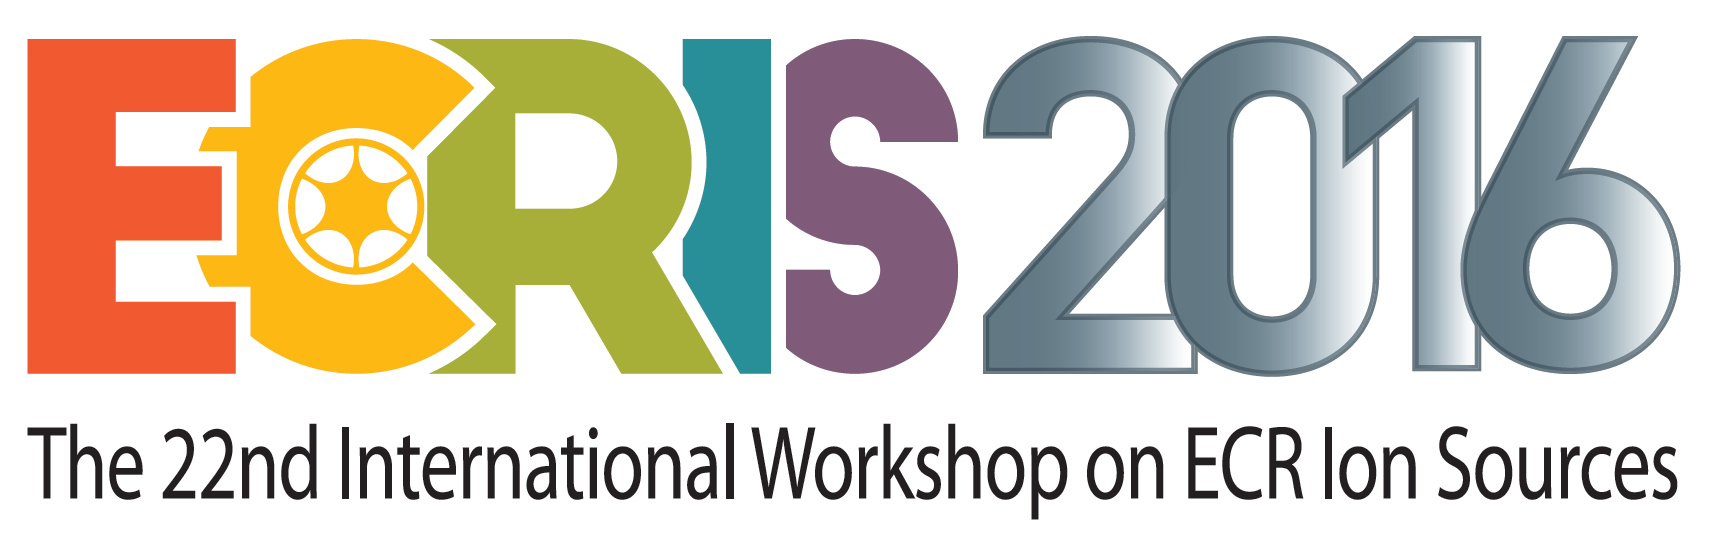 ECRIS2016-Logo1